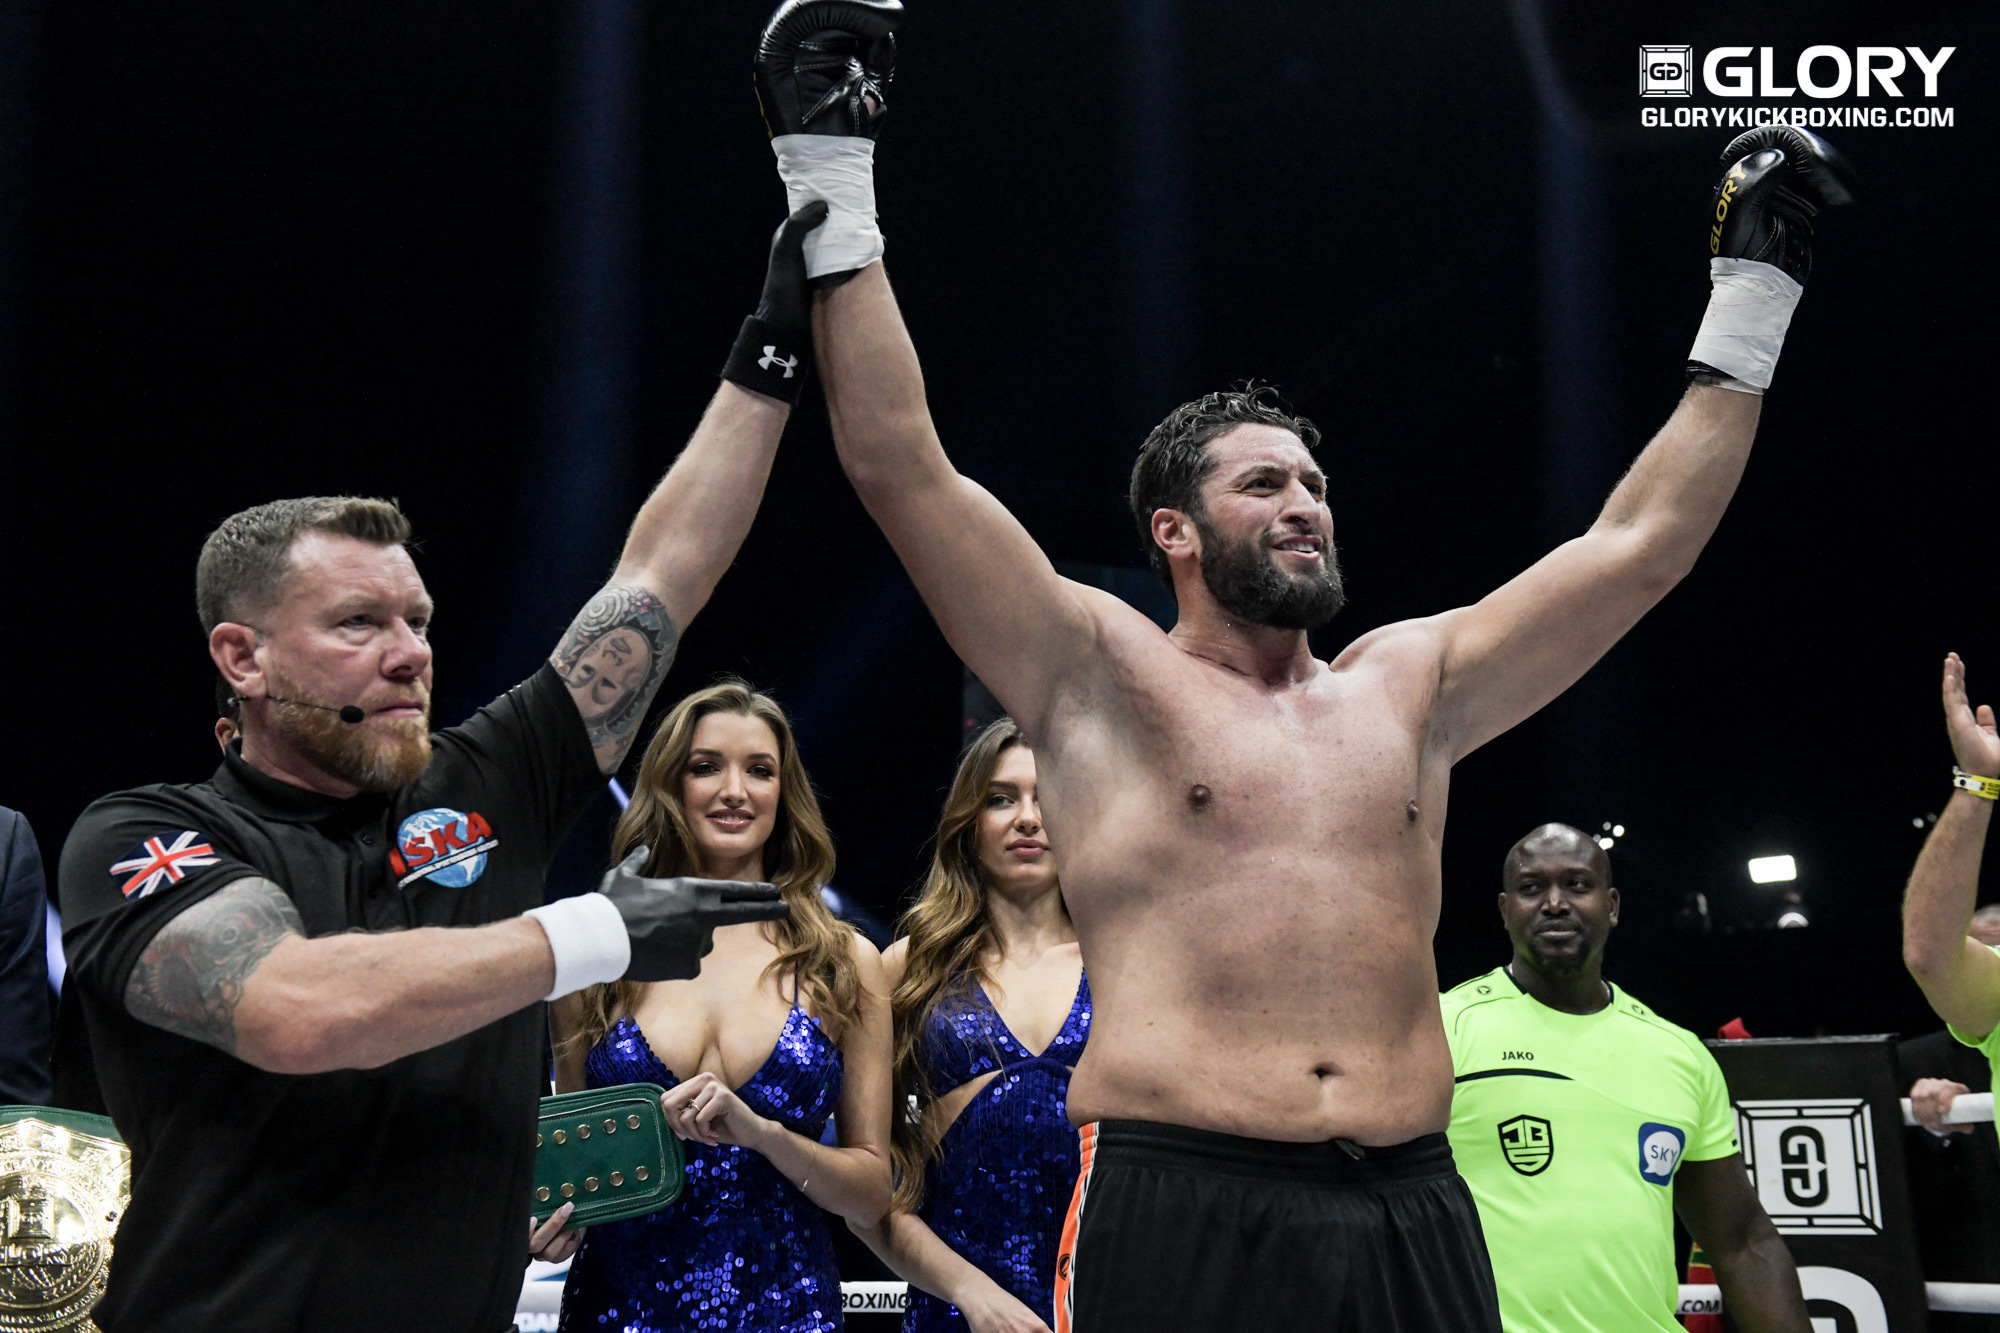 Ben Saddik wins GLORY 62 heavyweight tournament with three victories in one night